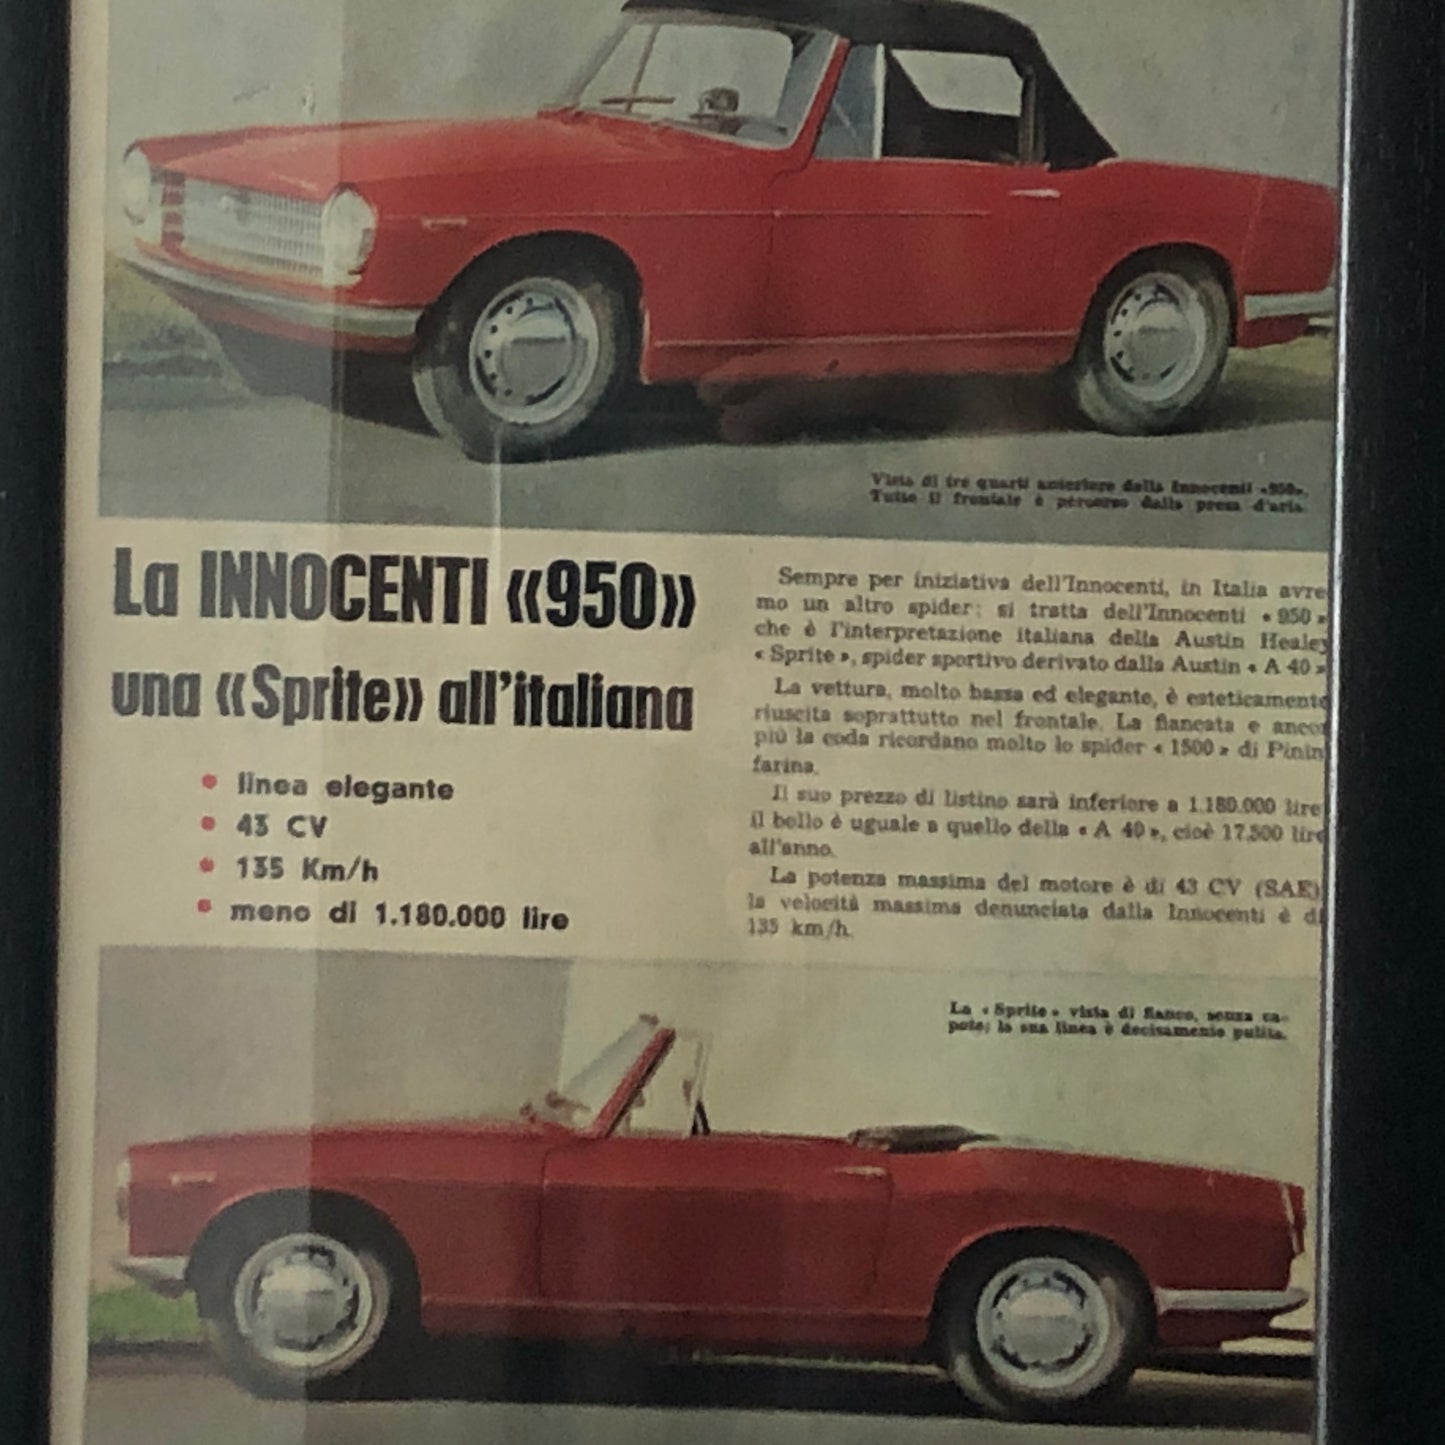 Innocenti, Presentation Innocenti 950 Year 1960 with Caption in Italian